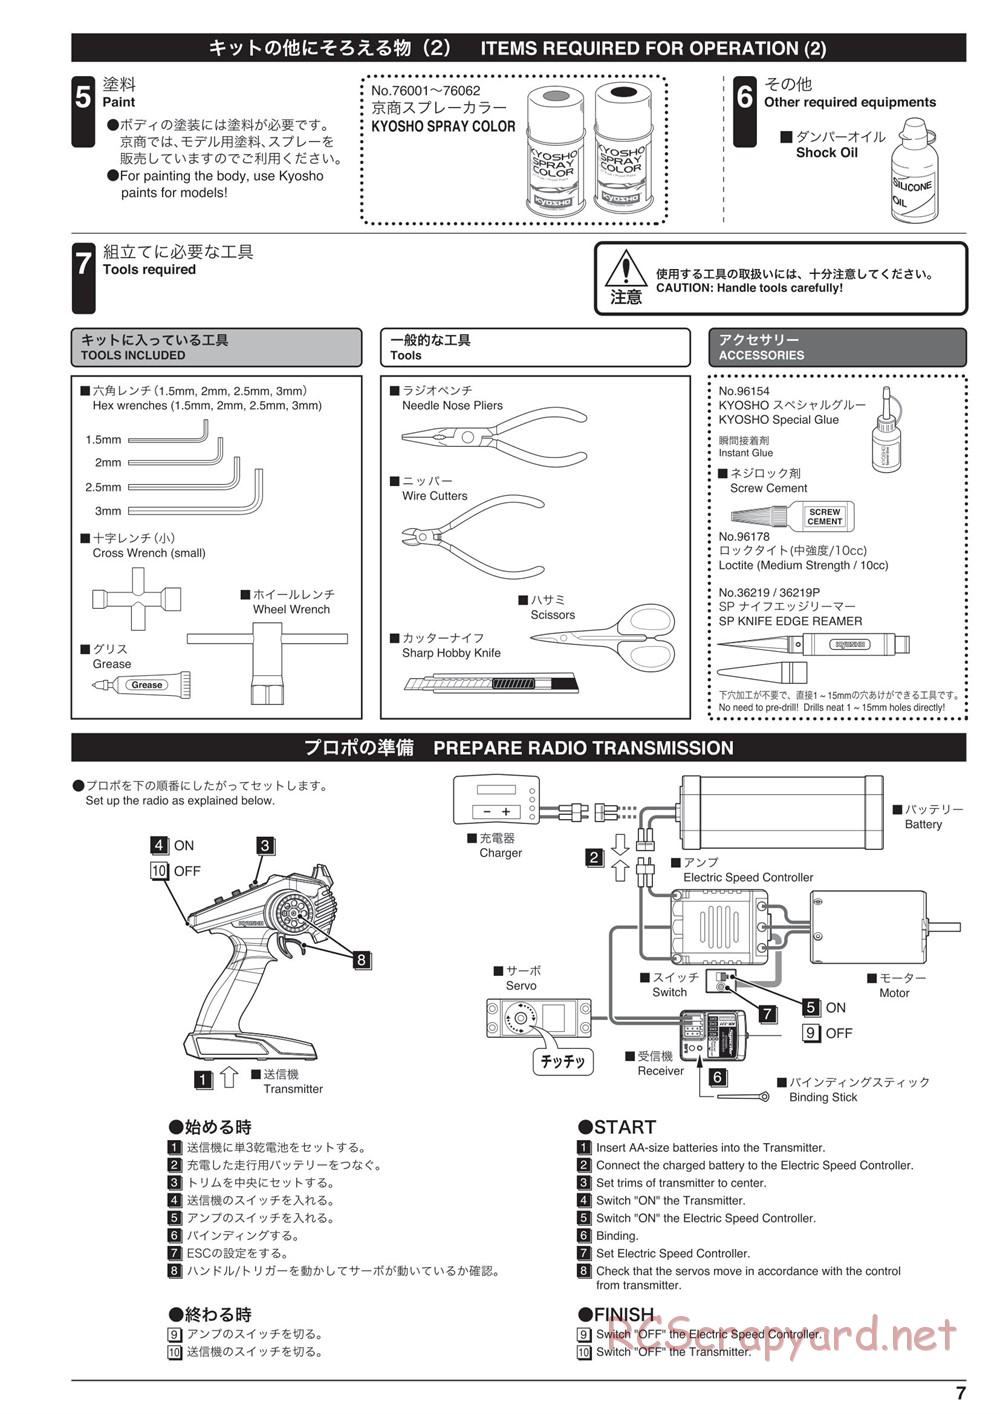 Kyosho - Inferno MP9e Evo - Manual - Page 7